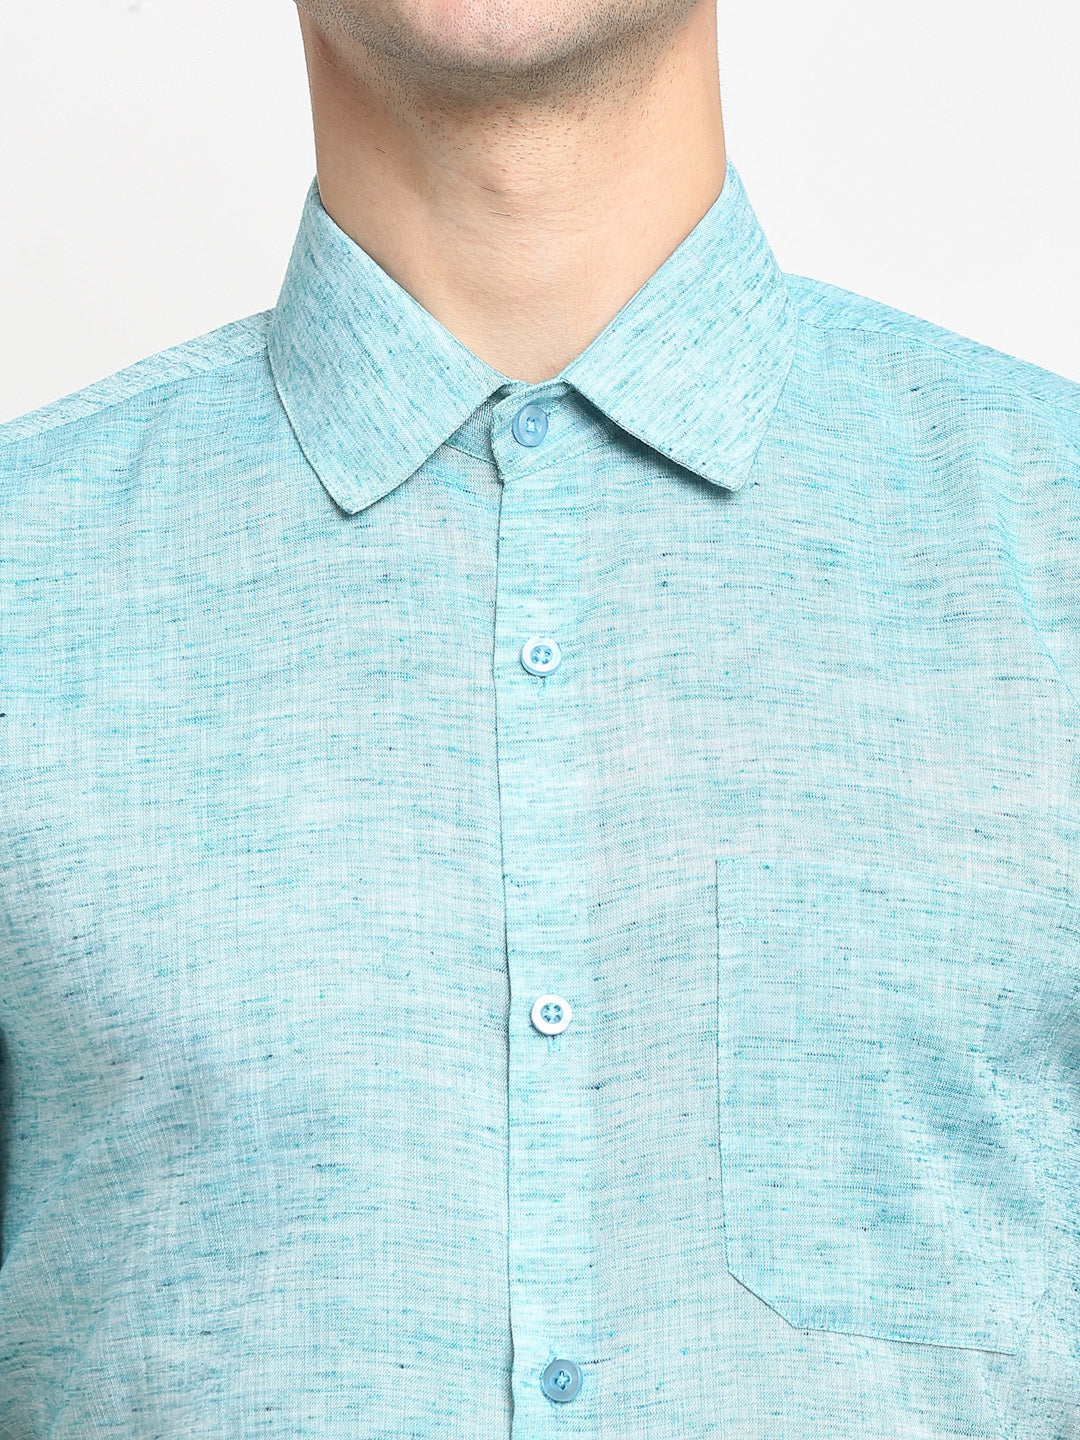 Men's Green Solid Cotton Half Sleeves Formal Shirt ( SF 783Green ) - Jainish